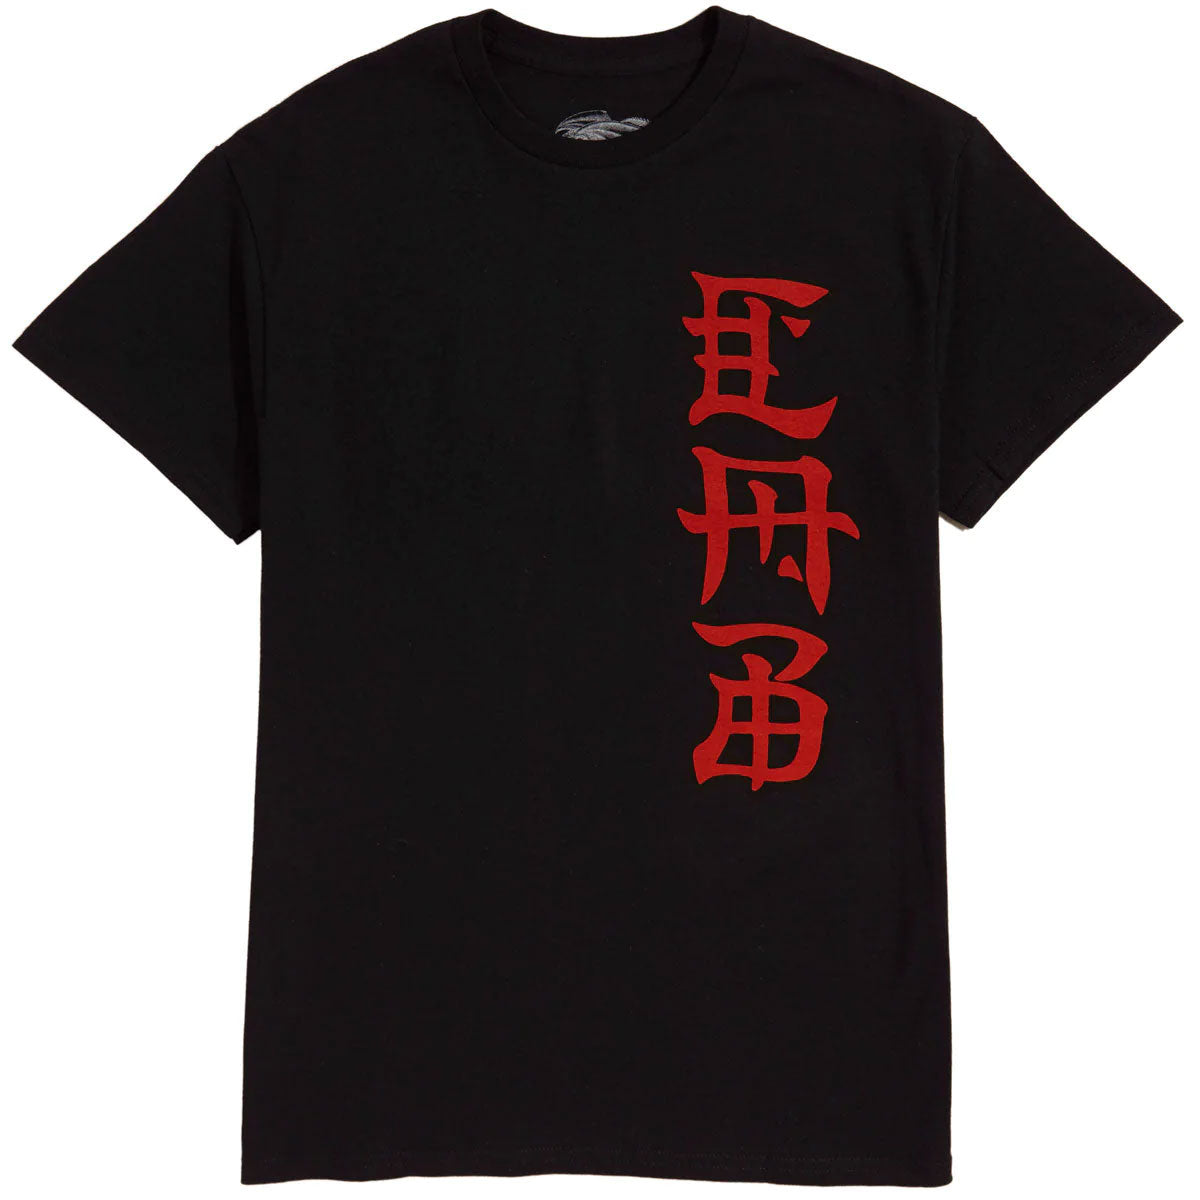 Powell-Peralta Steve Caballero Ban This T-Shirt - Black image 1